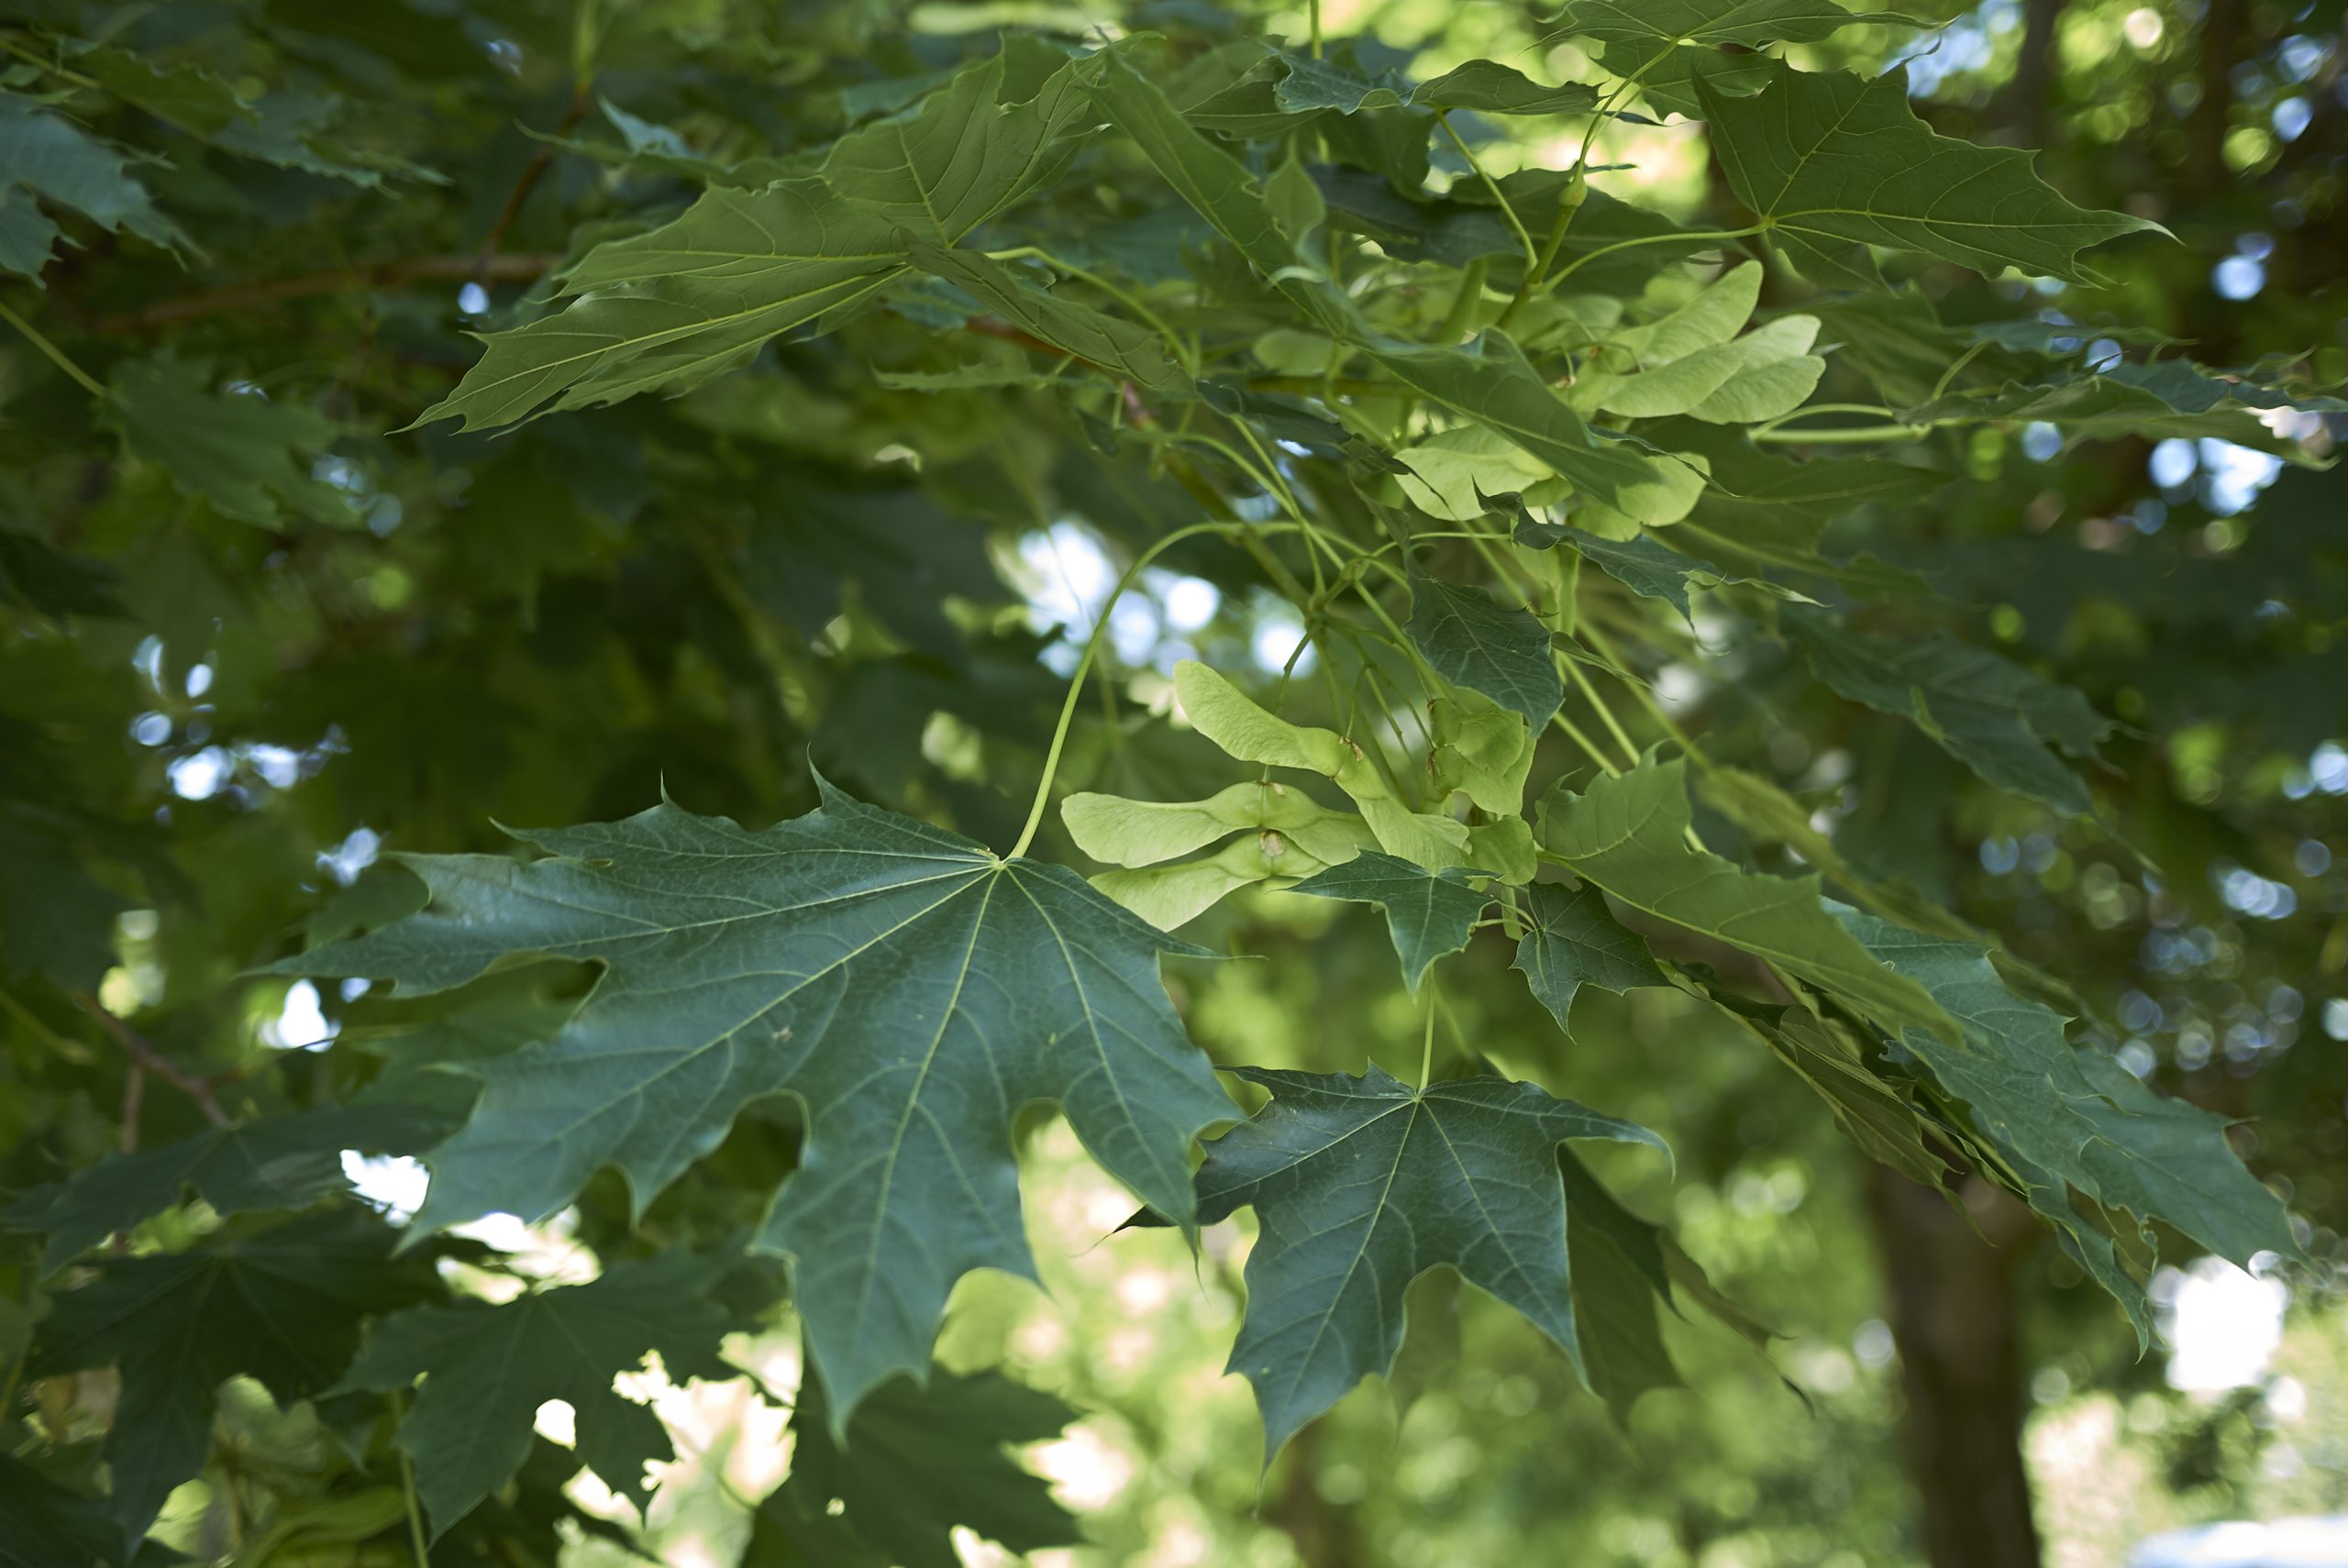 Acer platanoides "Globosum" - Klon pospolity